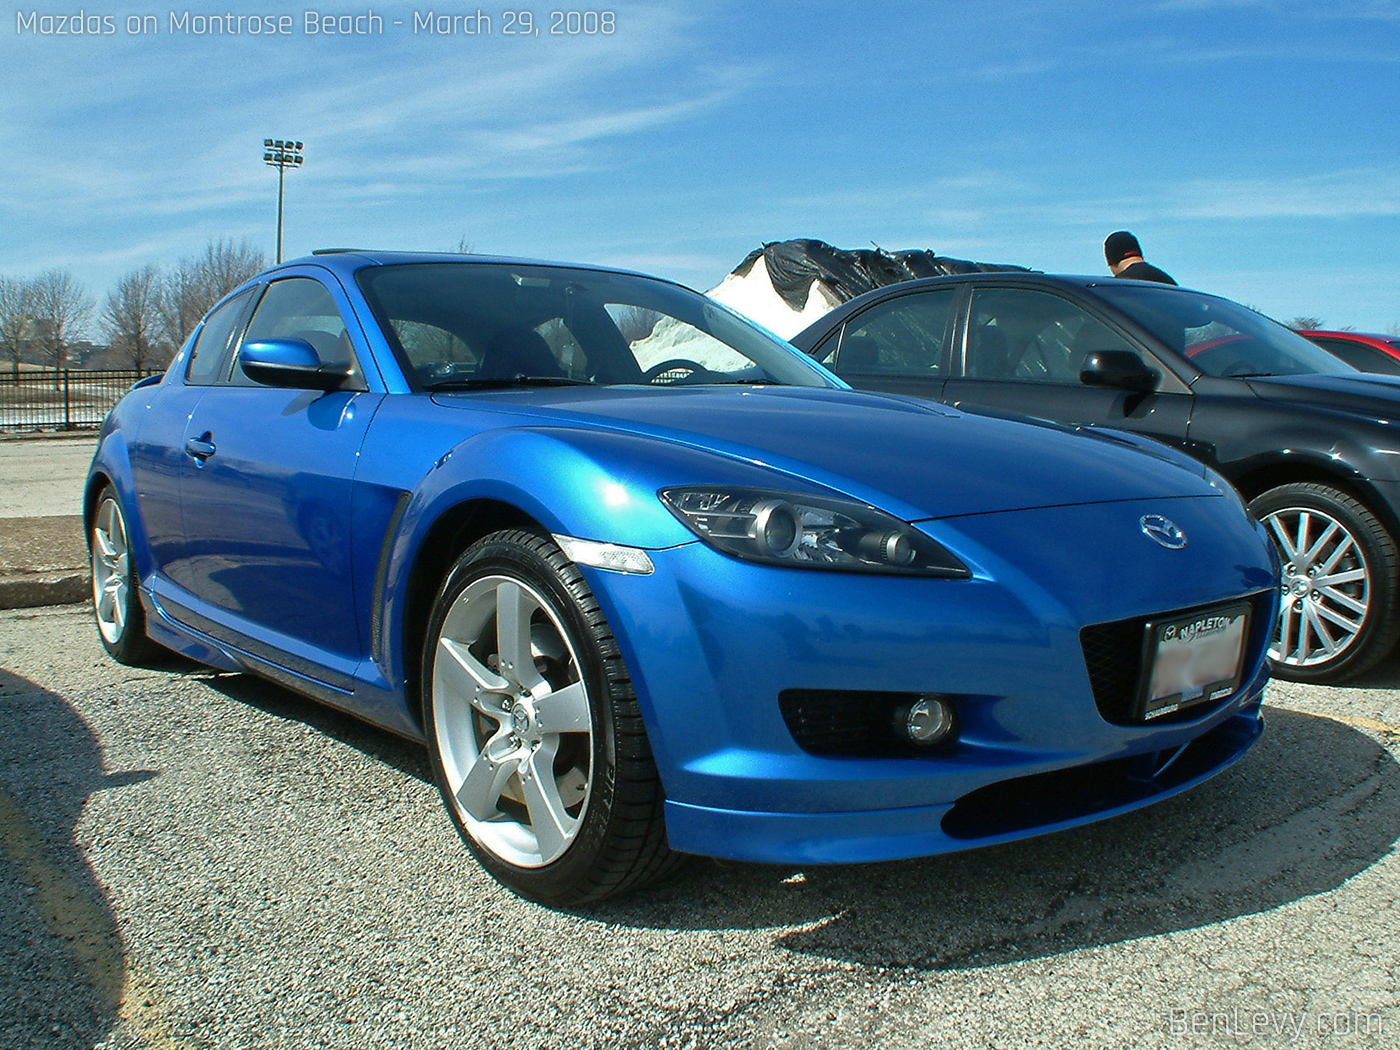 Blue Mazda RX-8